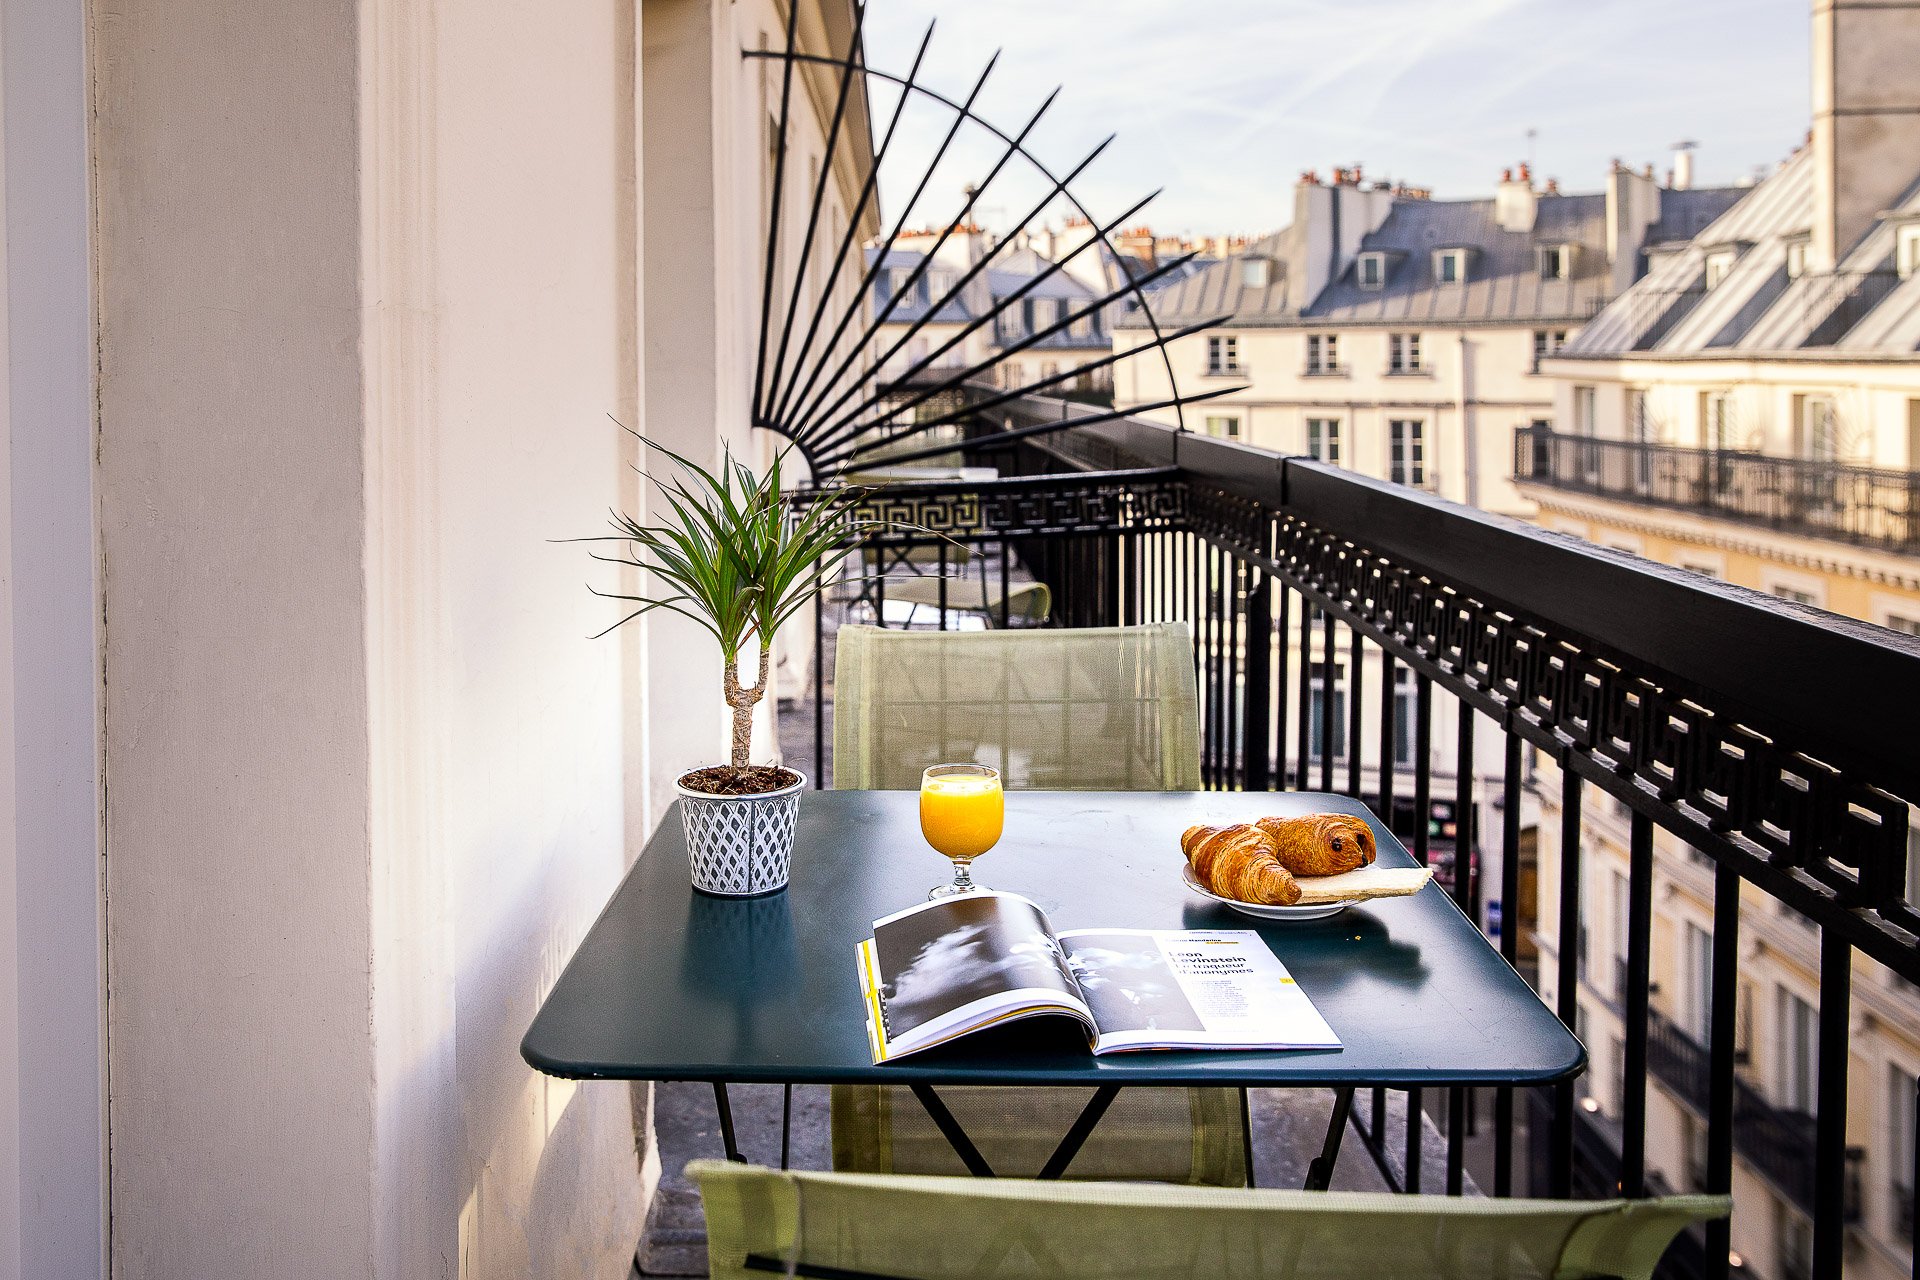 47/Chambres/Chambre-romantique-Villa-opera-drouot-hotel-4-etoiles-grands-boulevards-petit-dejeuner-terrasse.jpg